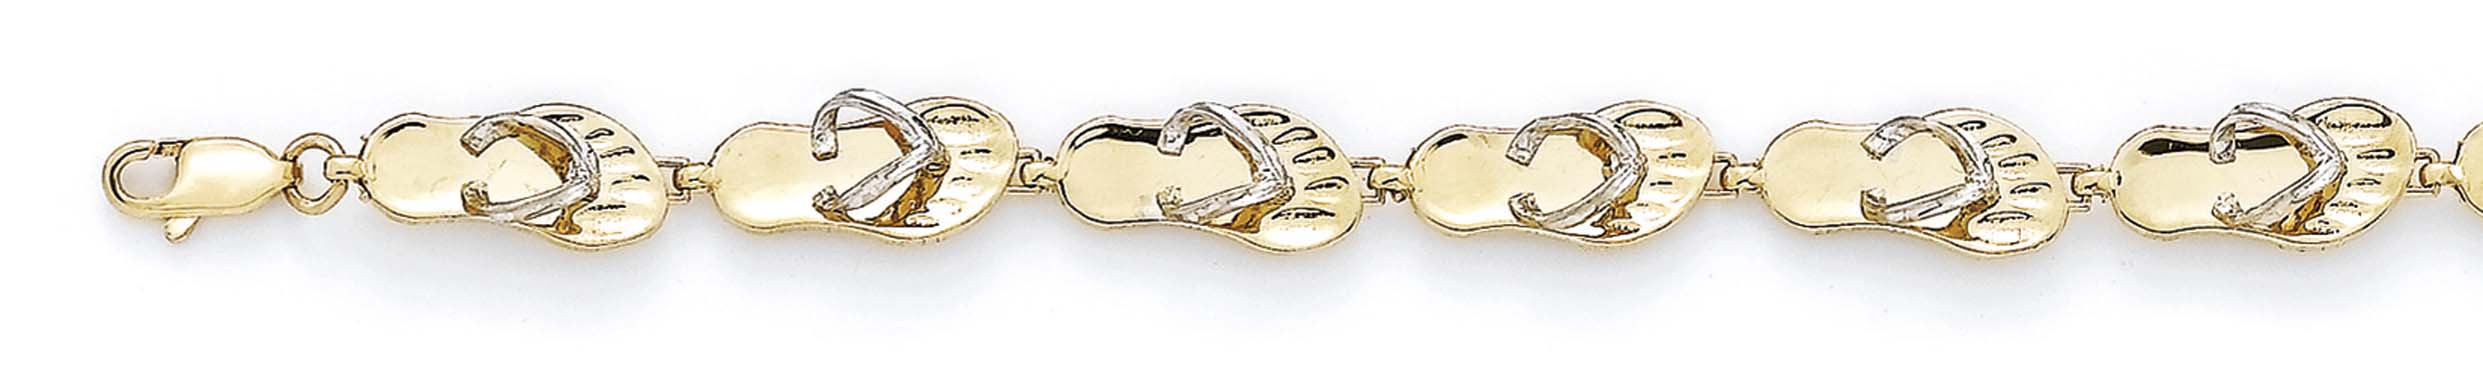 
14k Two-Tone Gold Flip-Flop 7.25 Inch Bracelet
